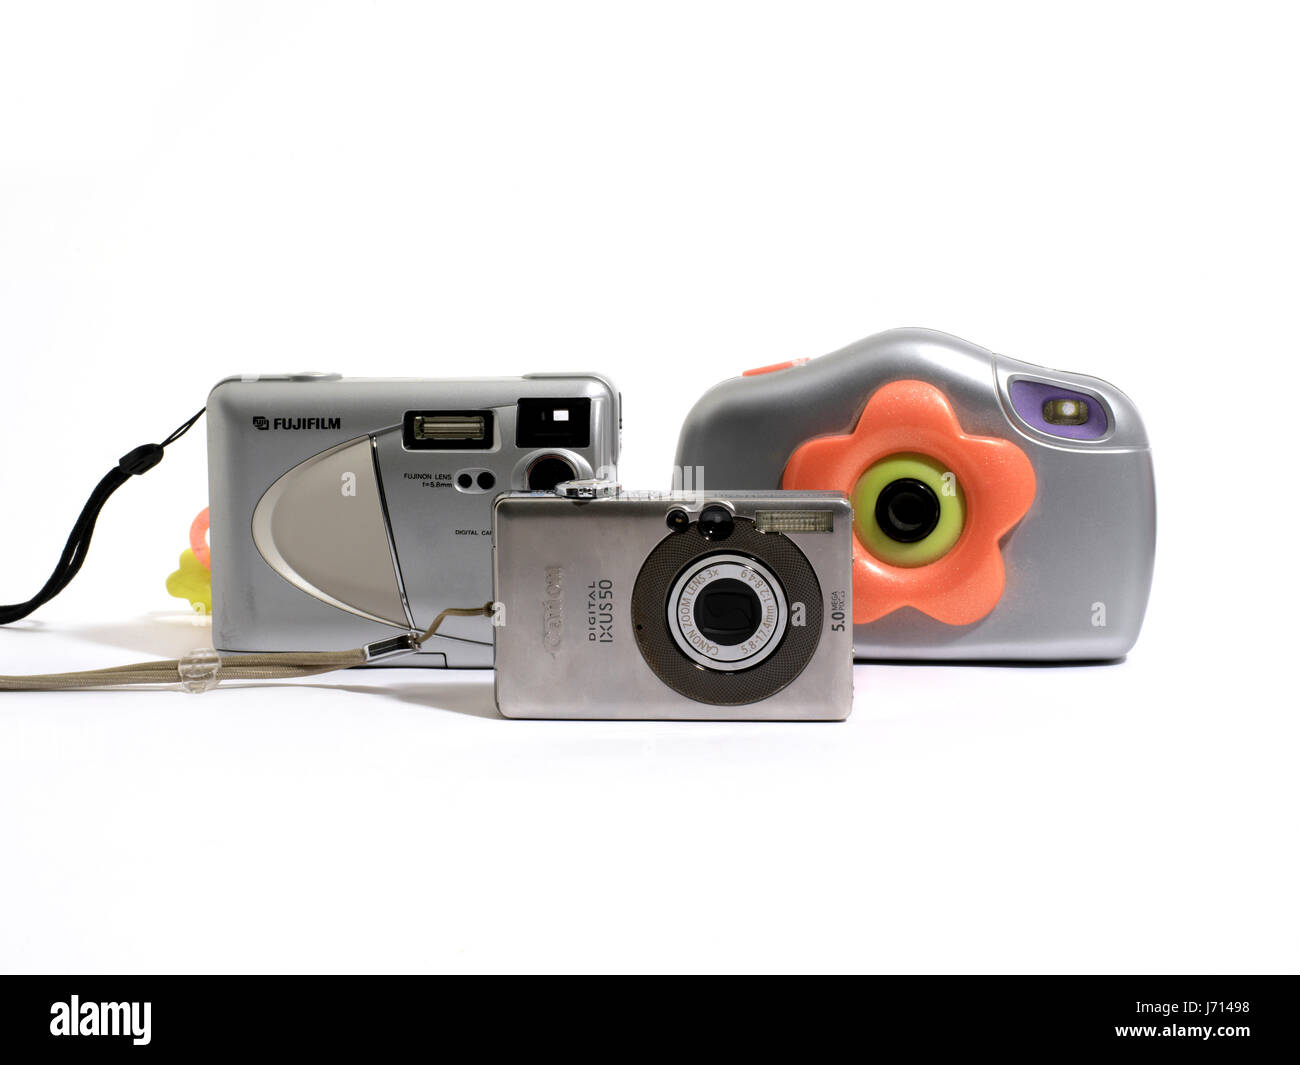 Drei digitale Kompaktkameras - Canon Ixus 50, Fujifilm Finepix 2300 und  Barbie Digitalkamera Stockfotografie - Alamy